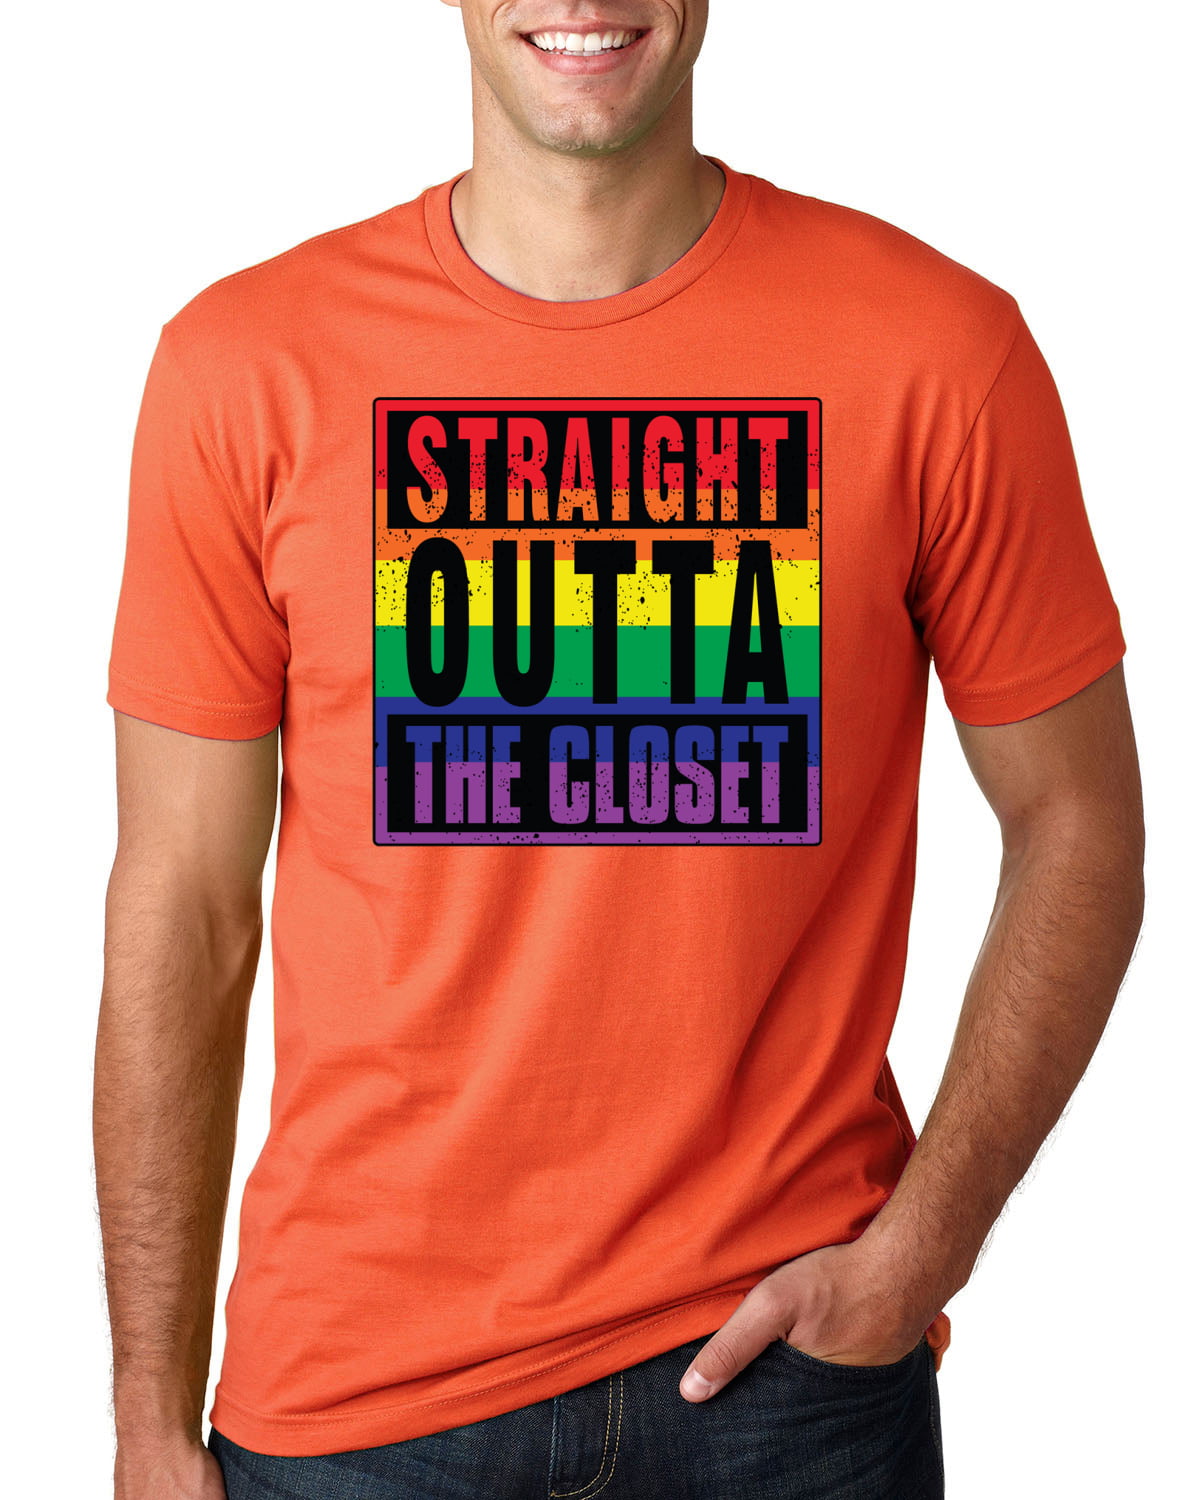 gay pride shirts spencers